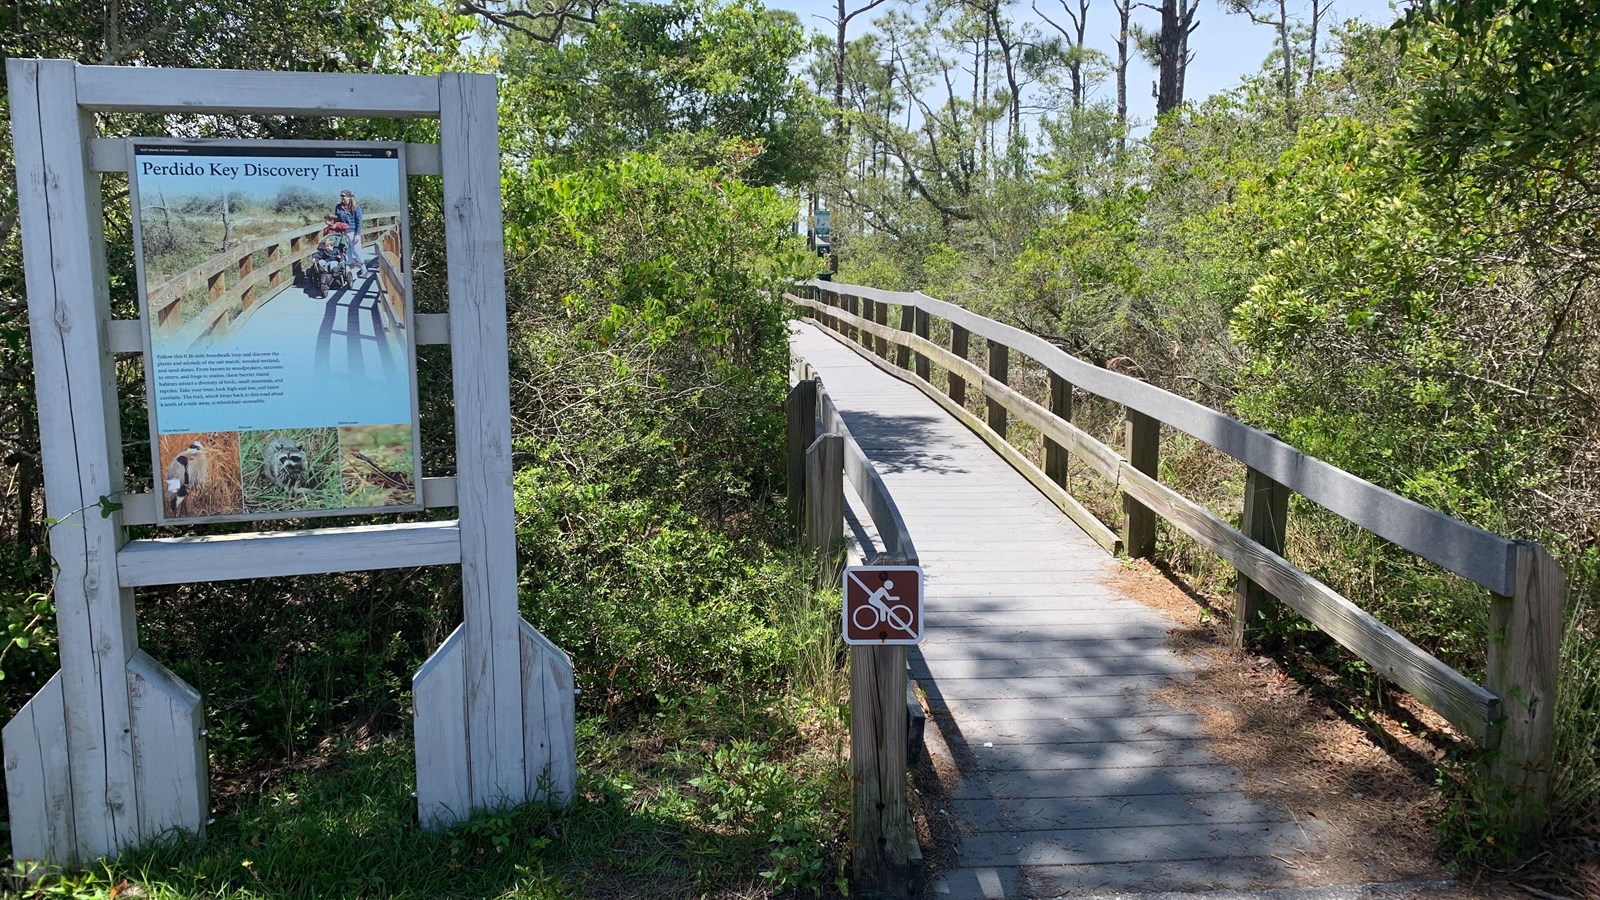 A boardwalk path extends into a coastal forest.